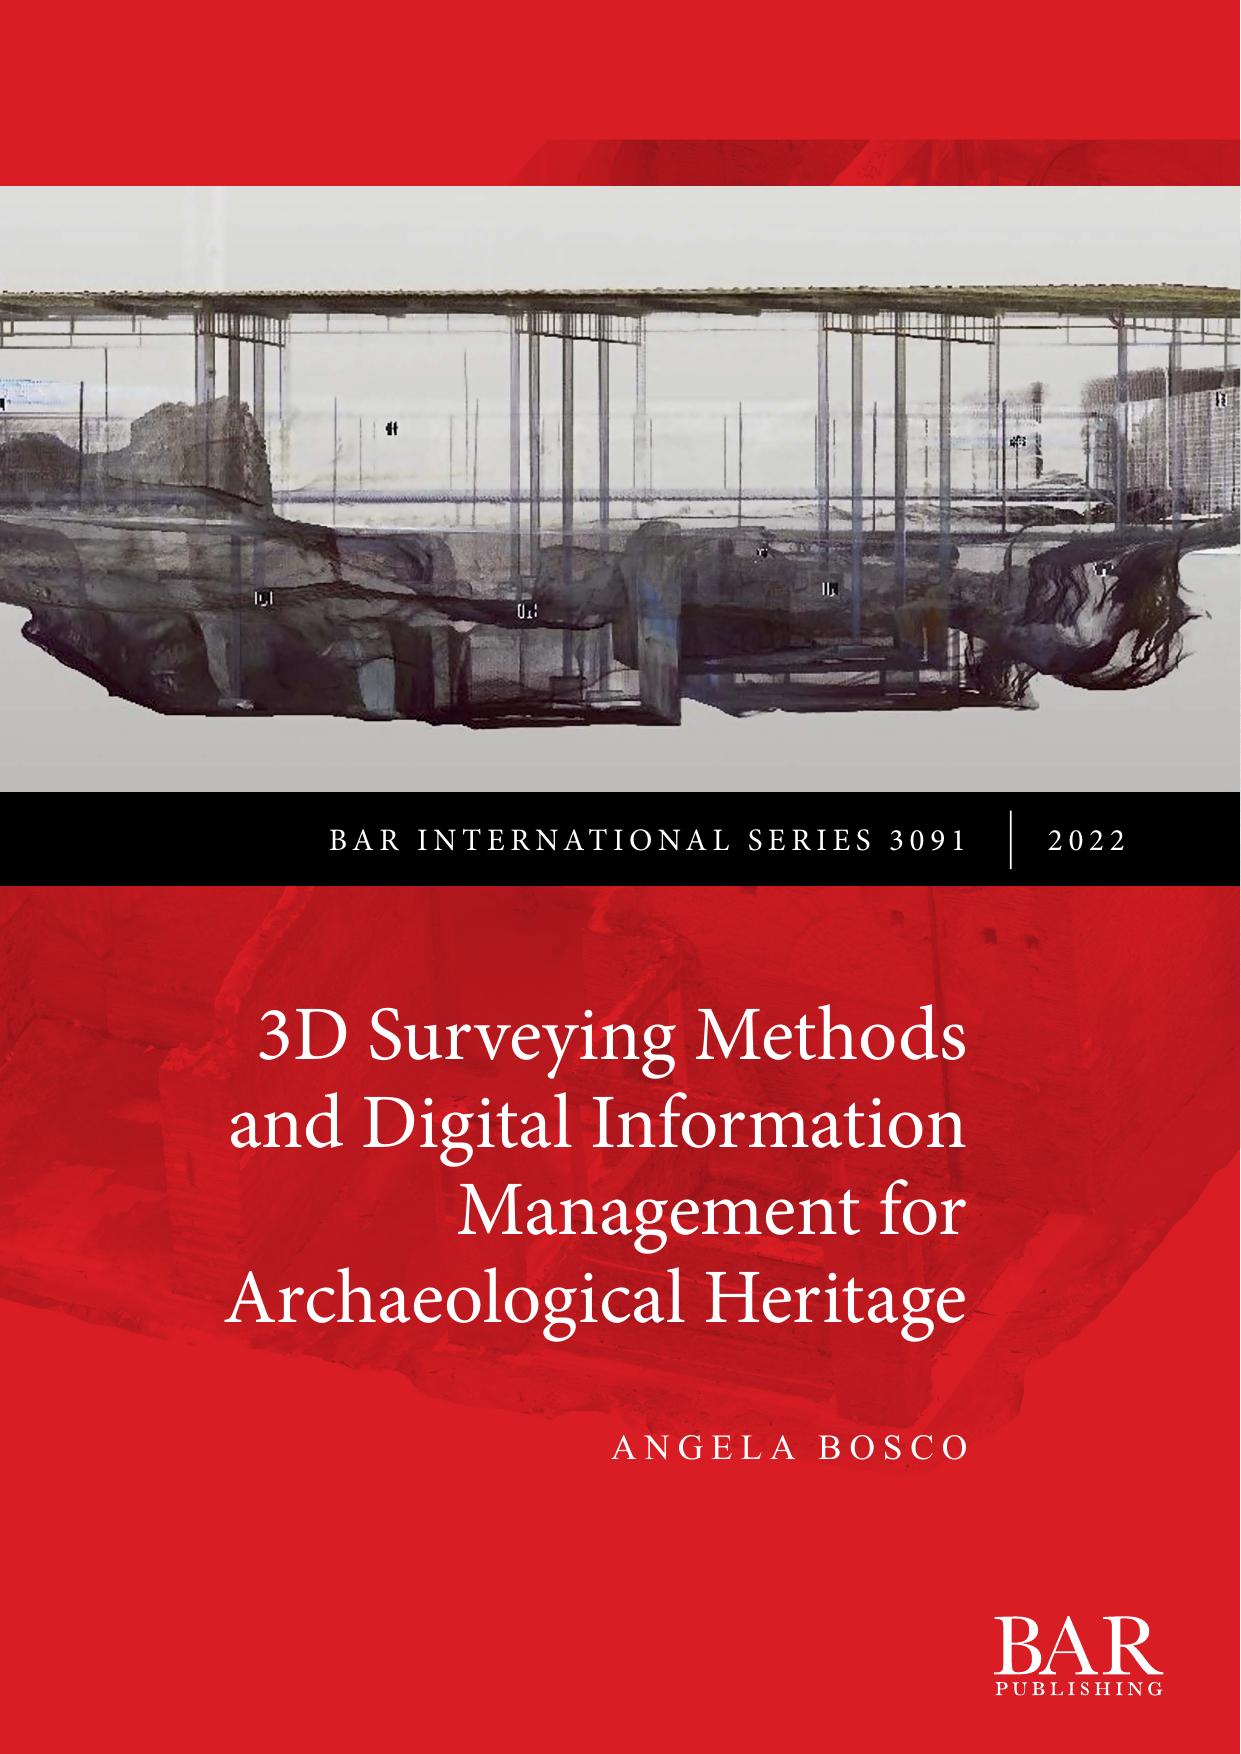 3D Surveying Methods and Digital Information Management for Archaeological Heritage-BAR Publishing (2022)